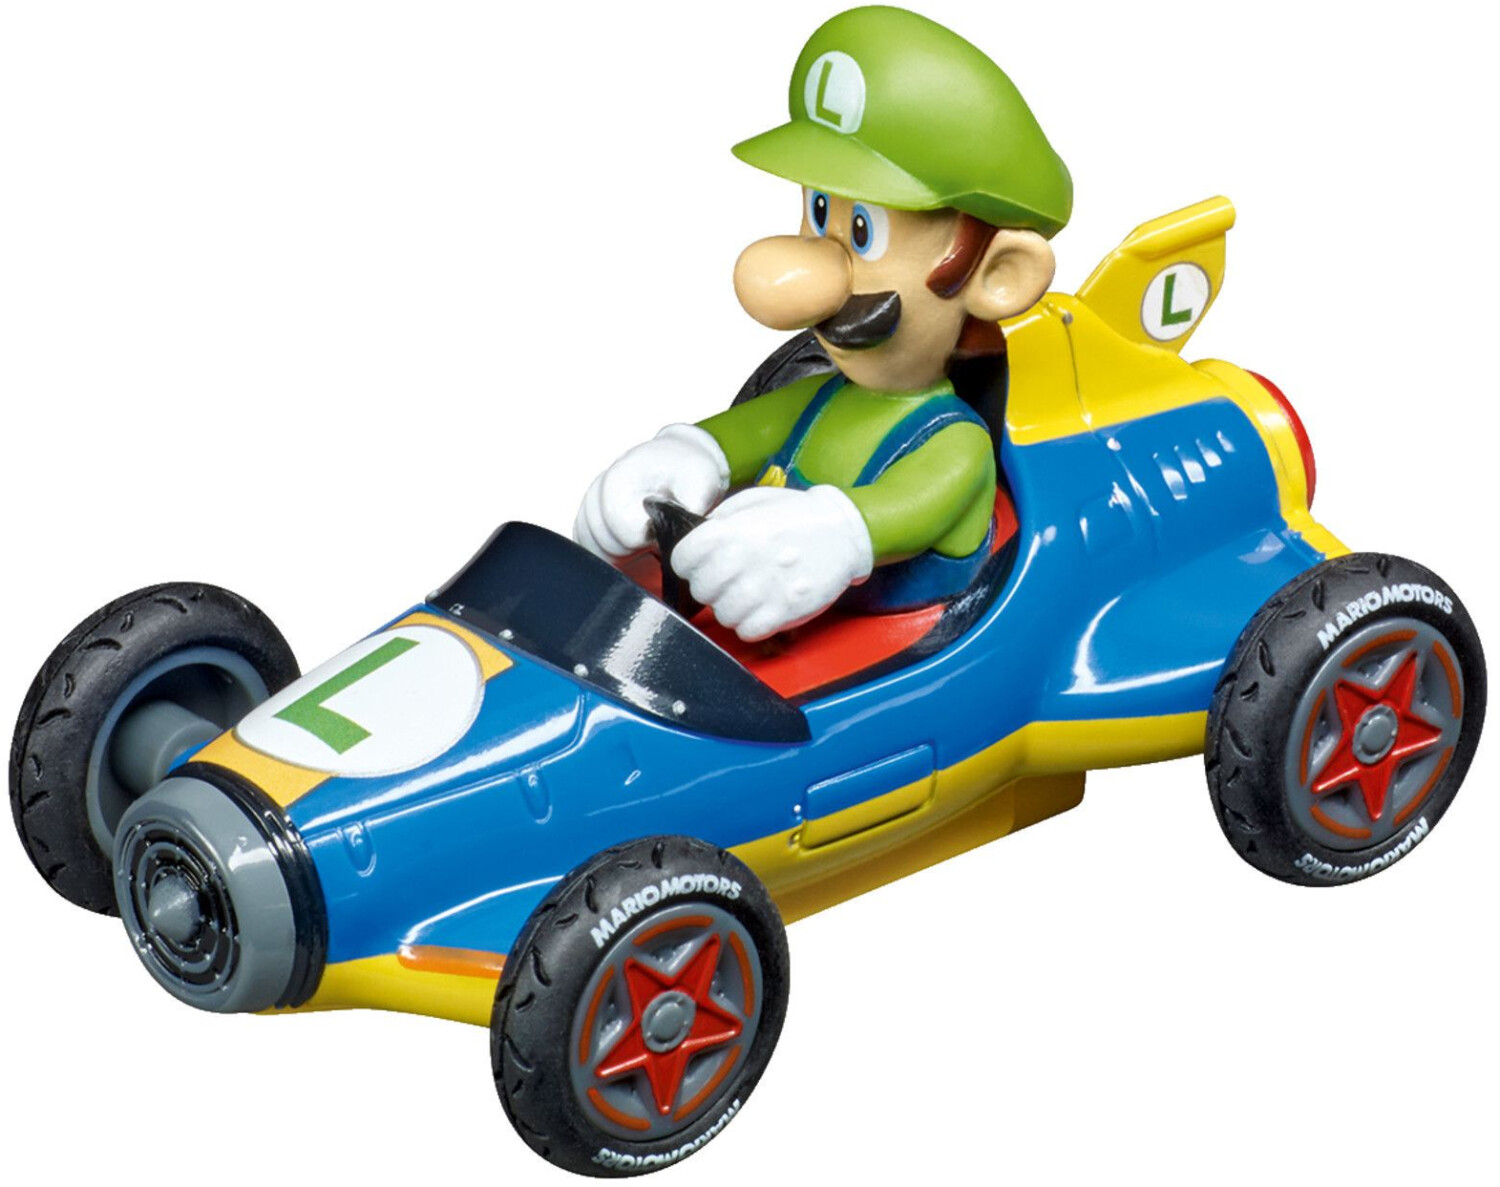 Coffret Circuit Carrera Go !!! Nintendo Mario Kart 7 1/43 chez